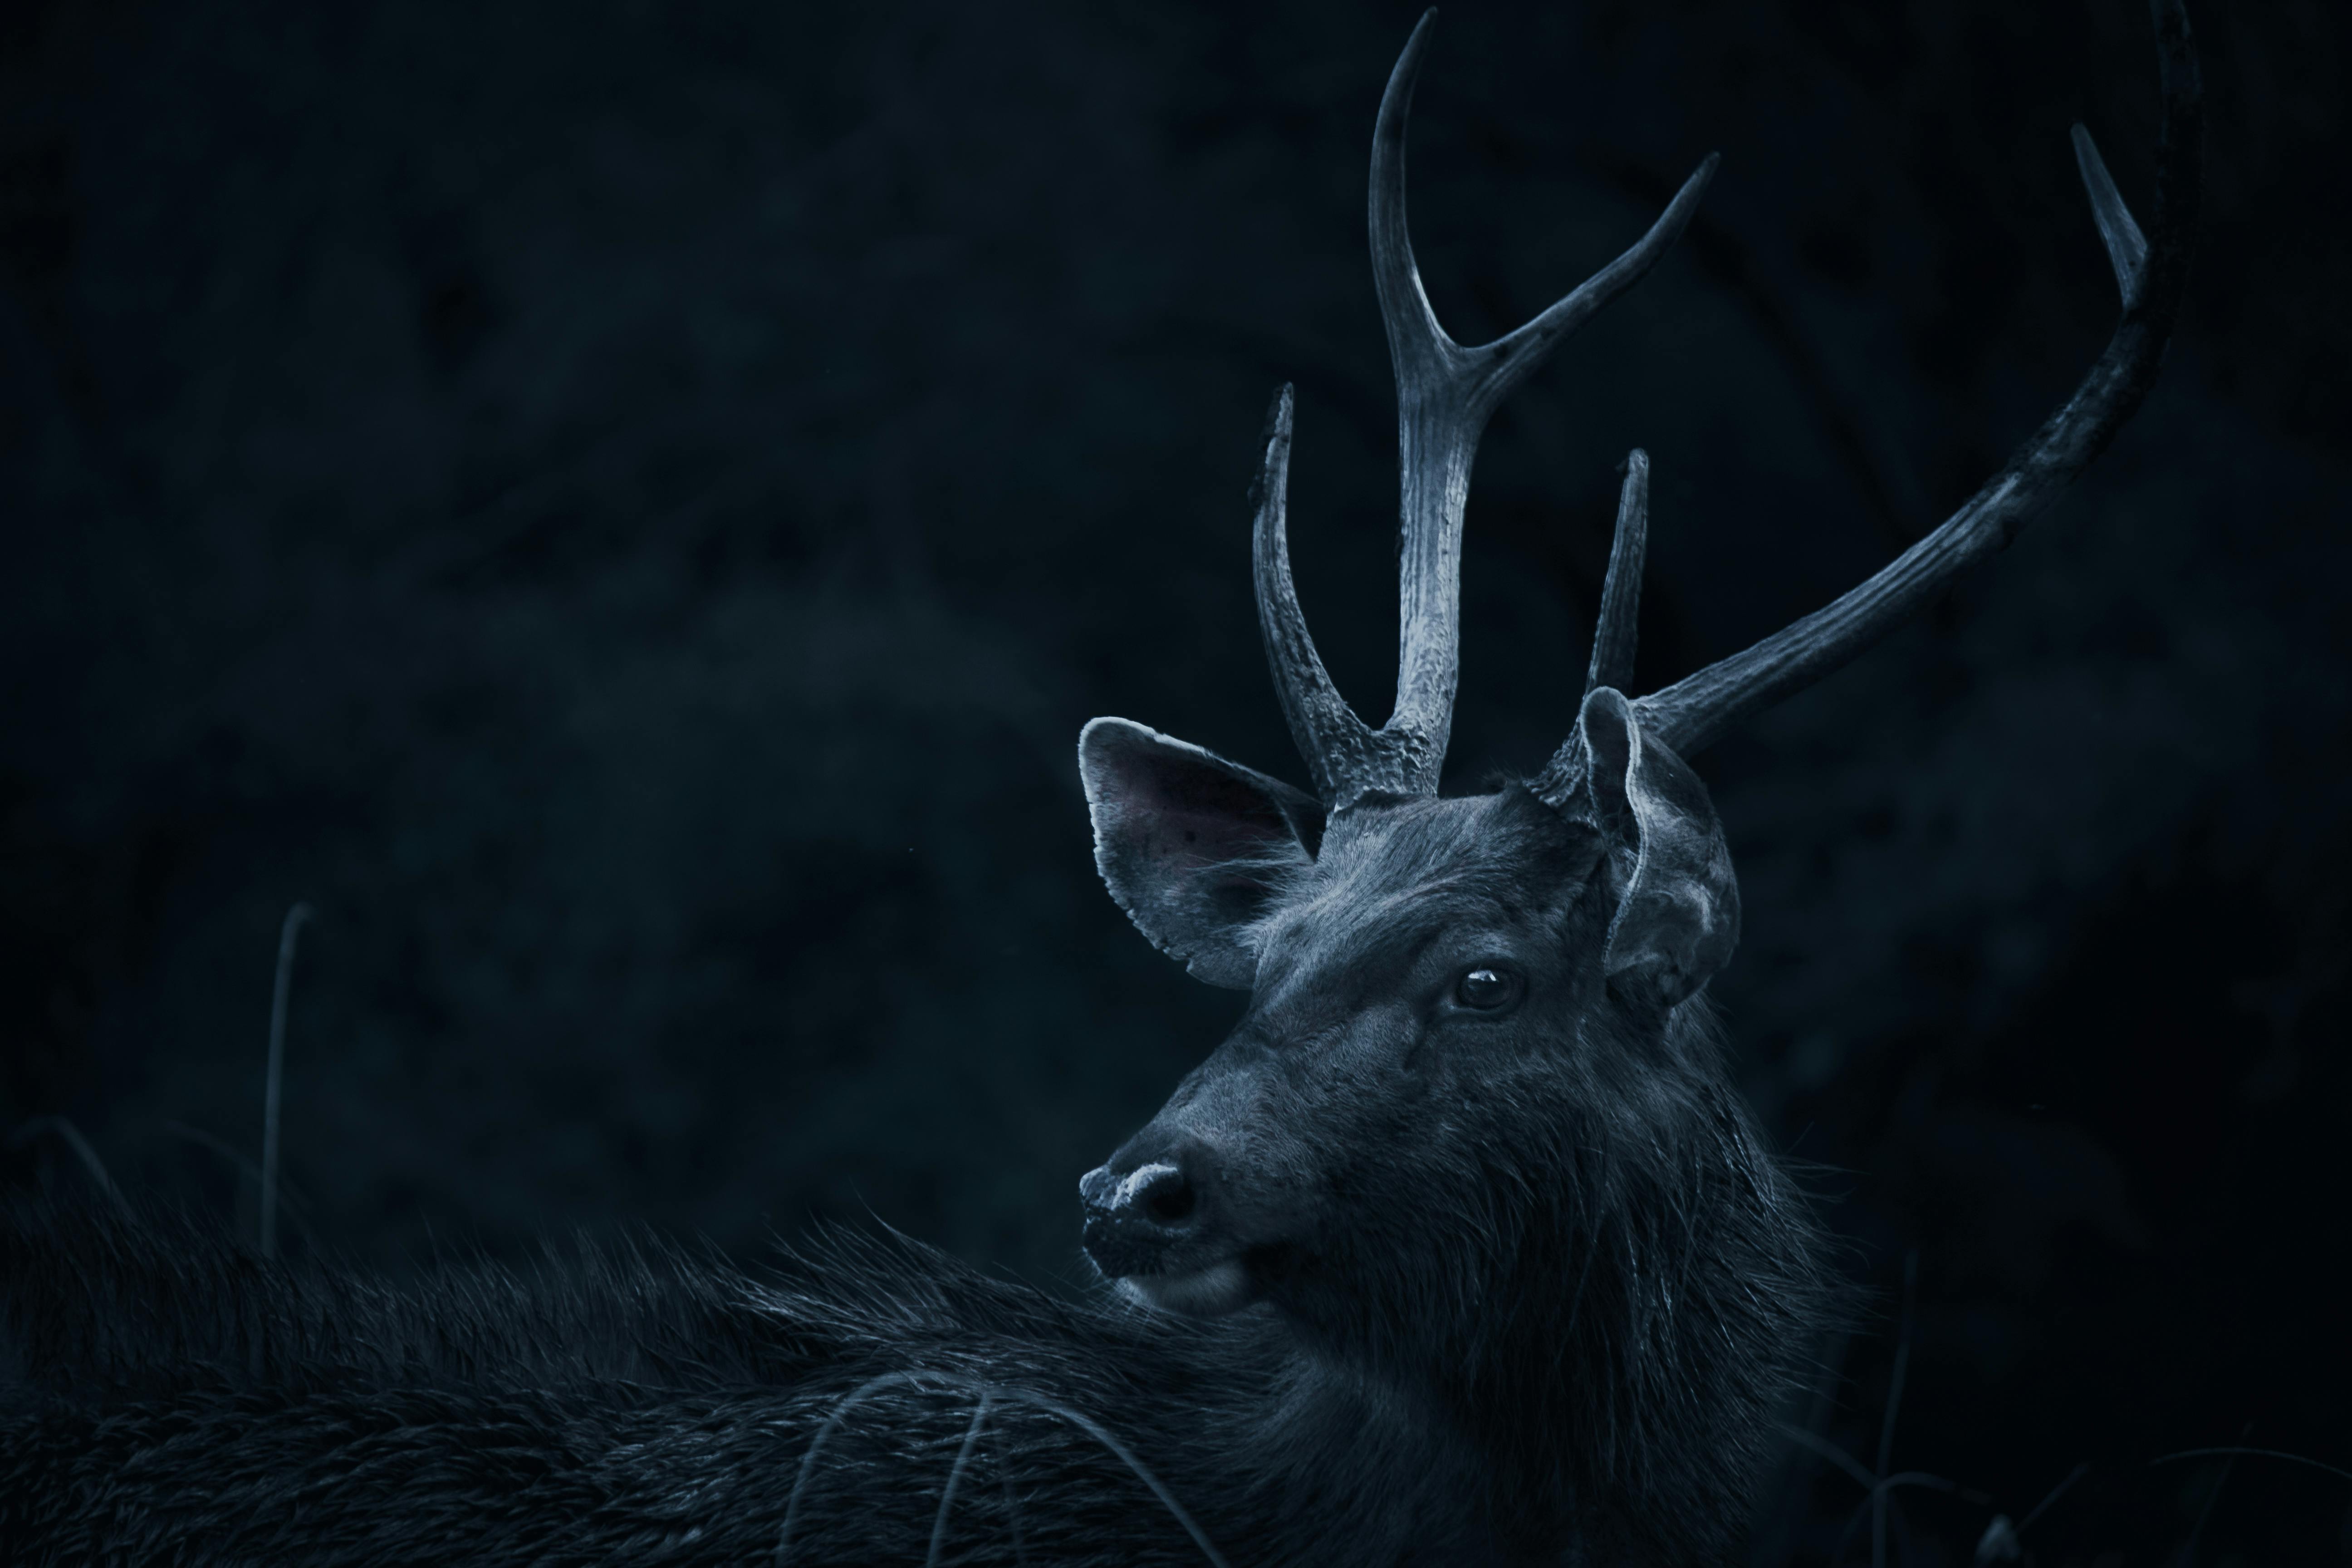 Wallpaper ID 57379  deer forest animals 4k free download